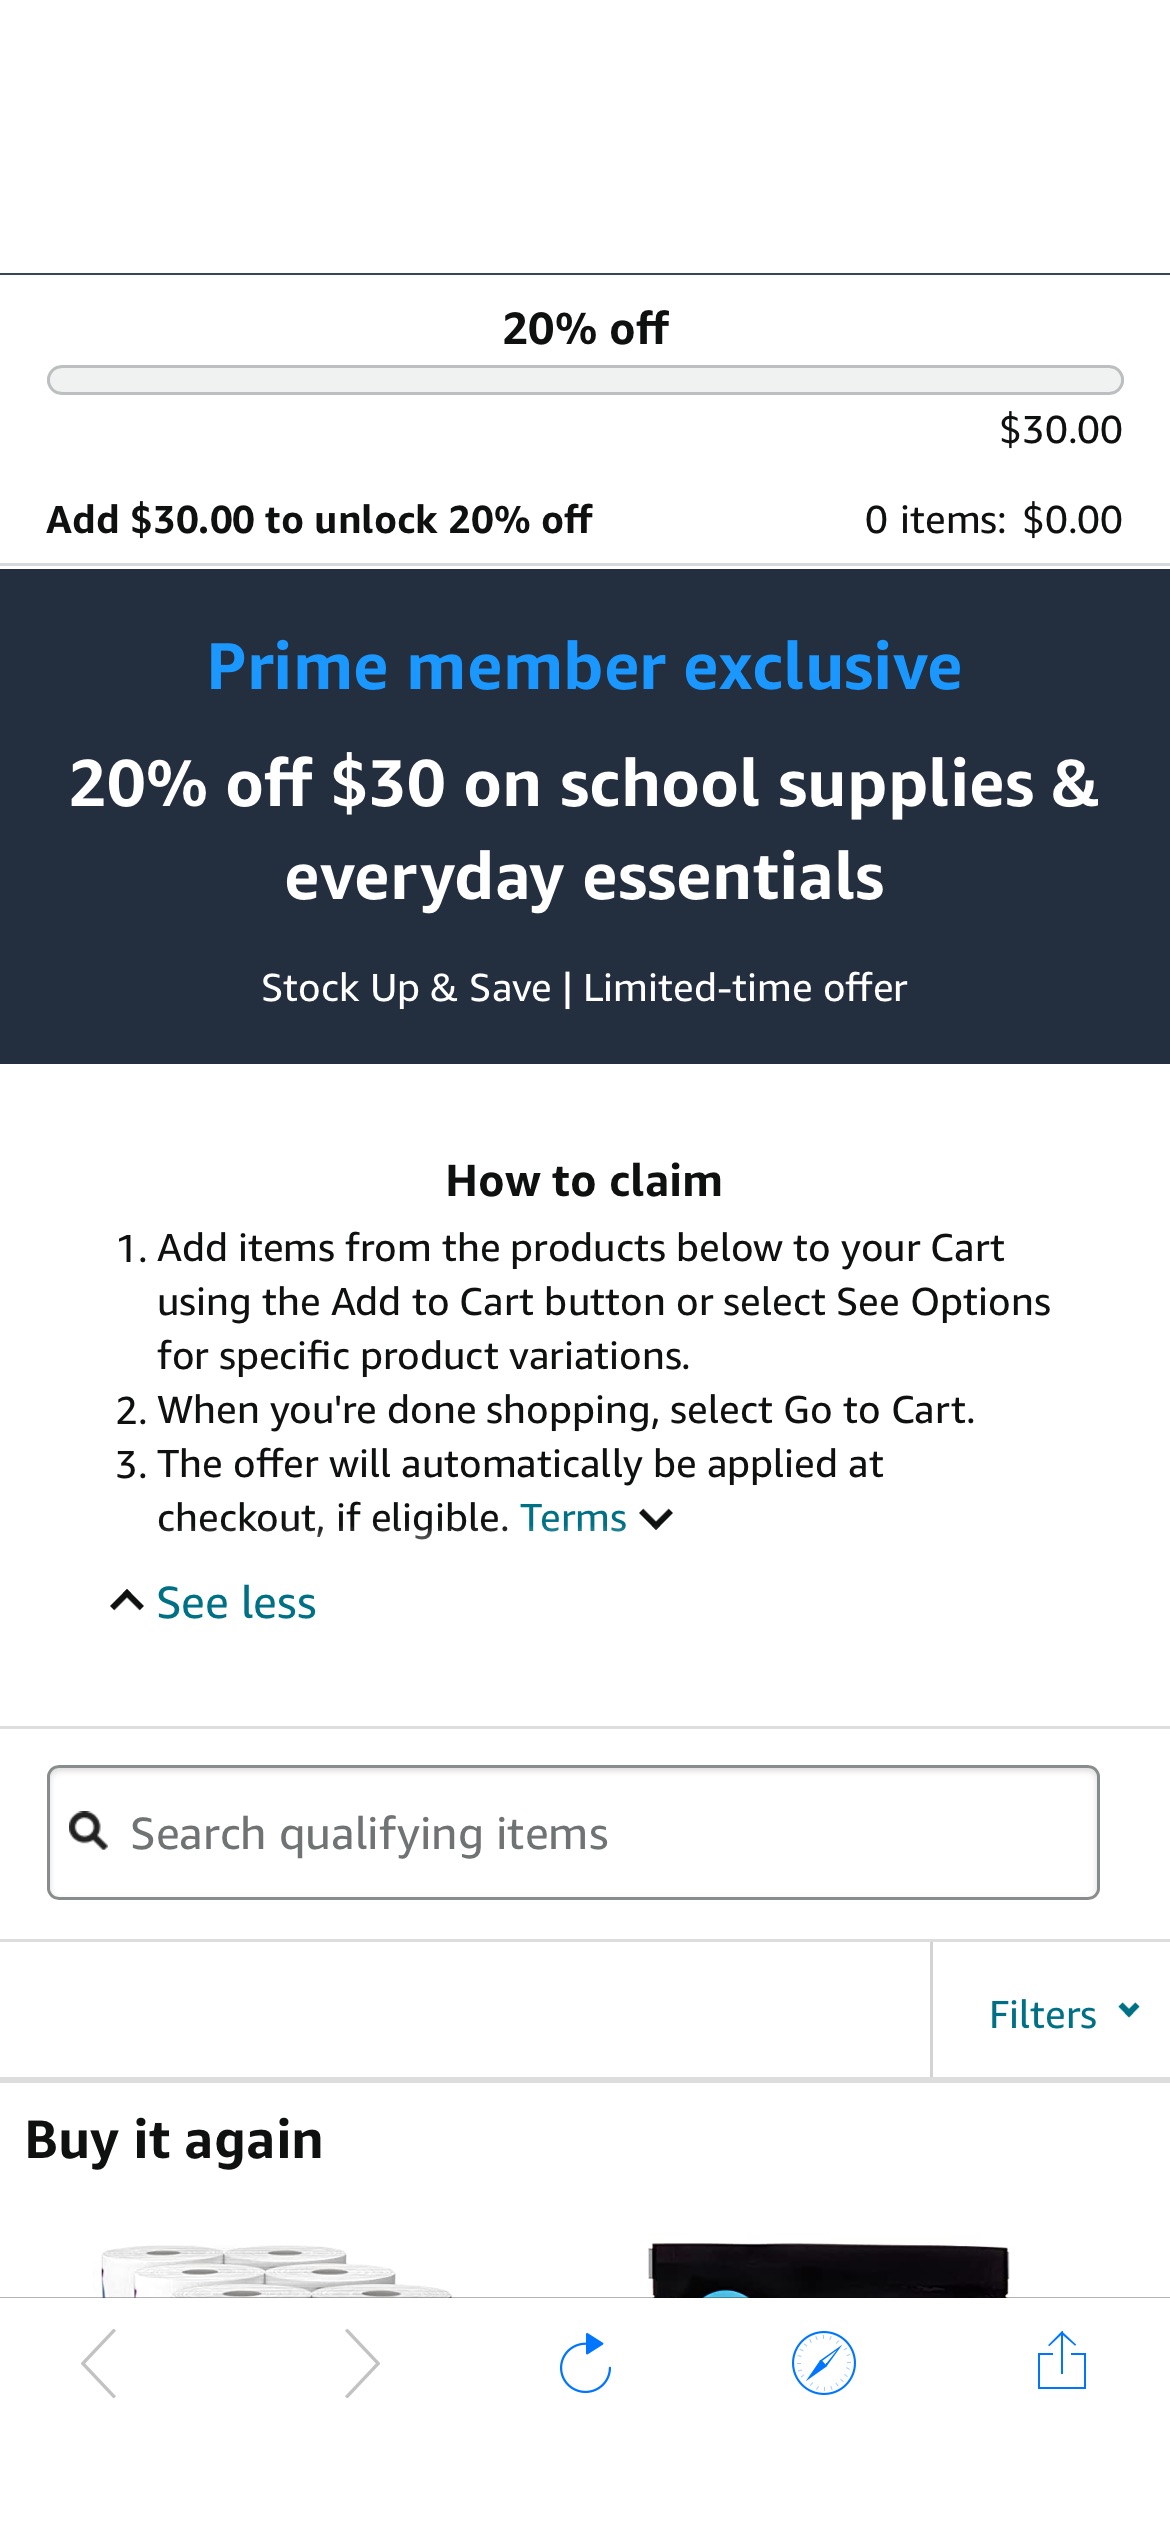 Amazon.com: 20% off $30 on school supplies & everyday essentials promotion